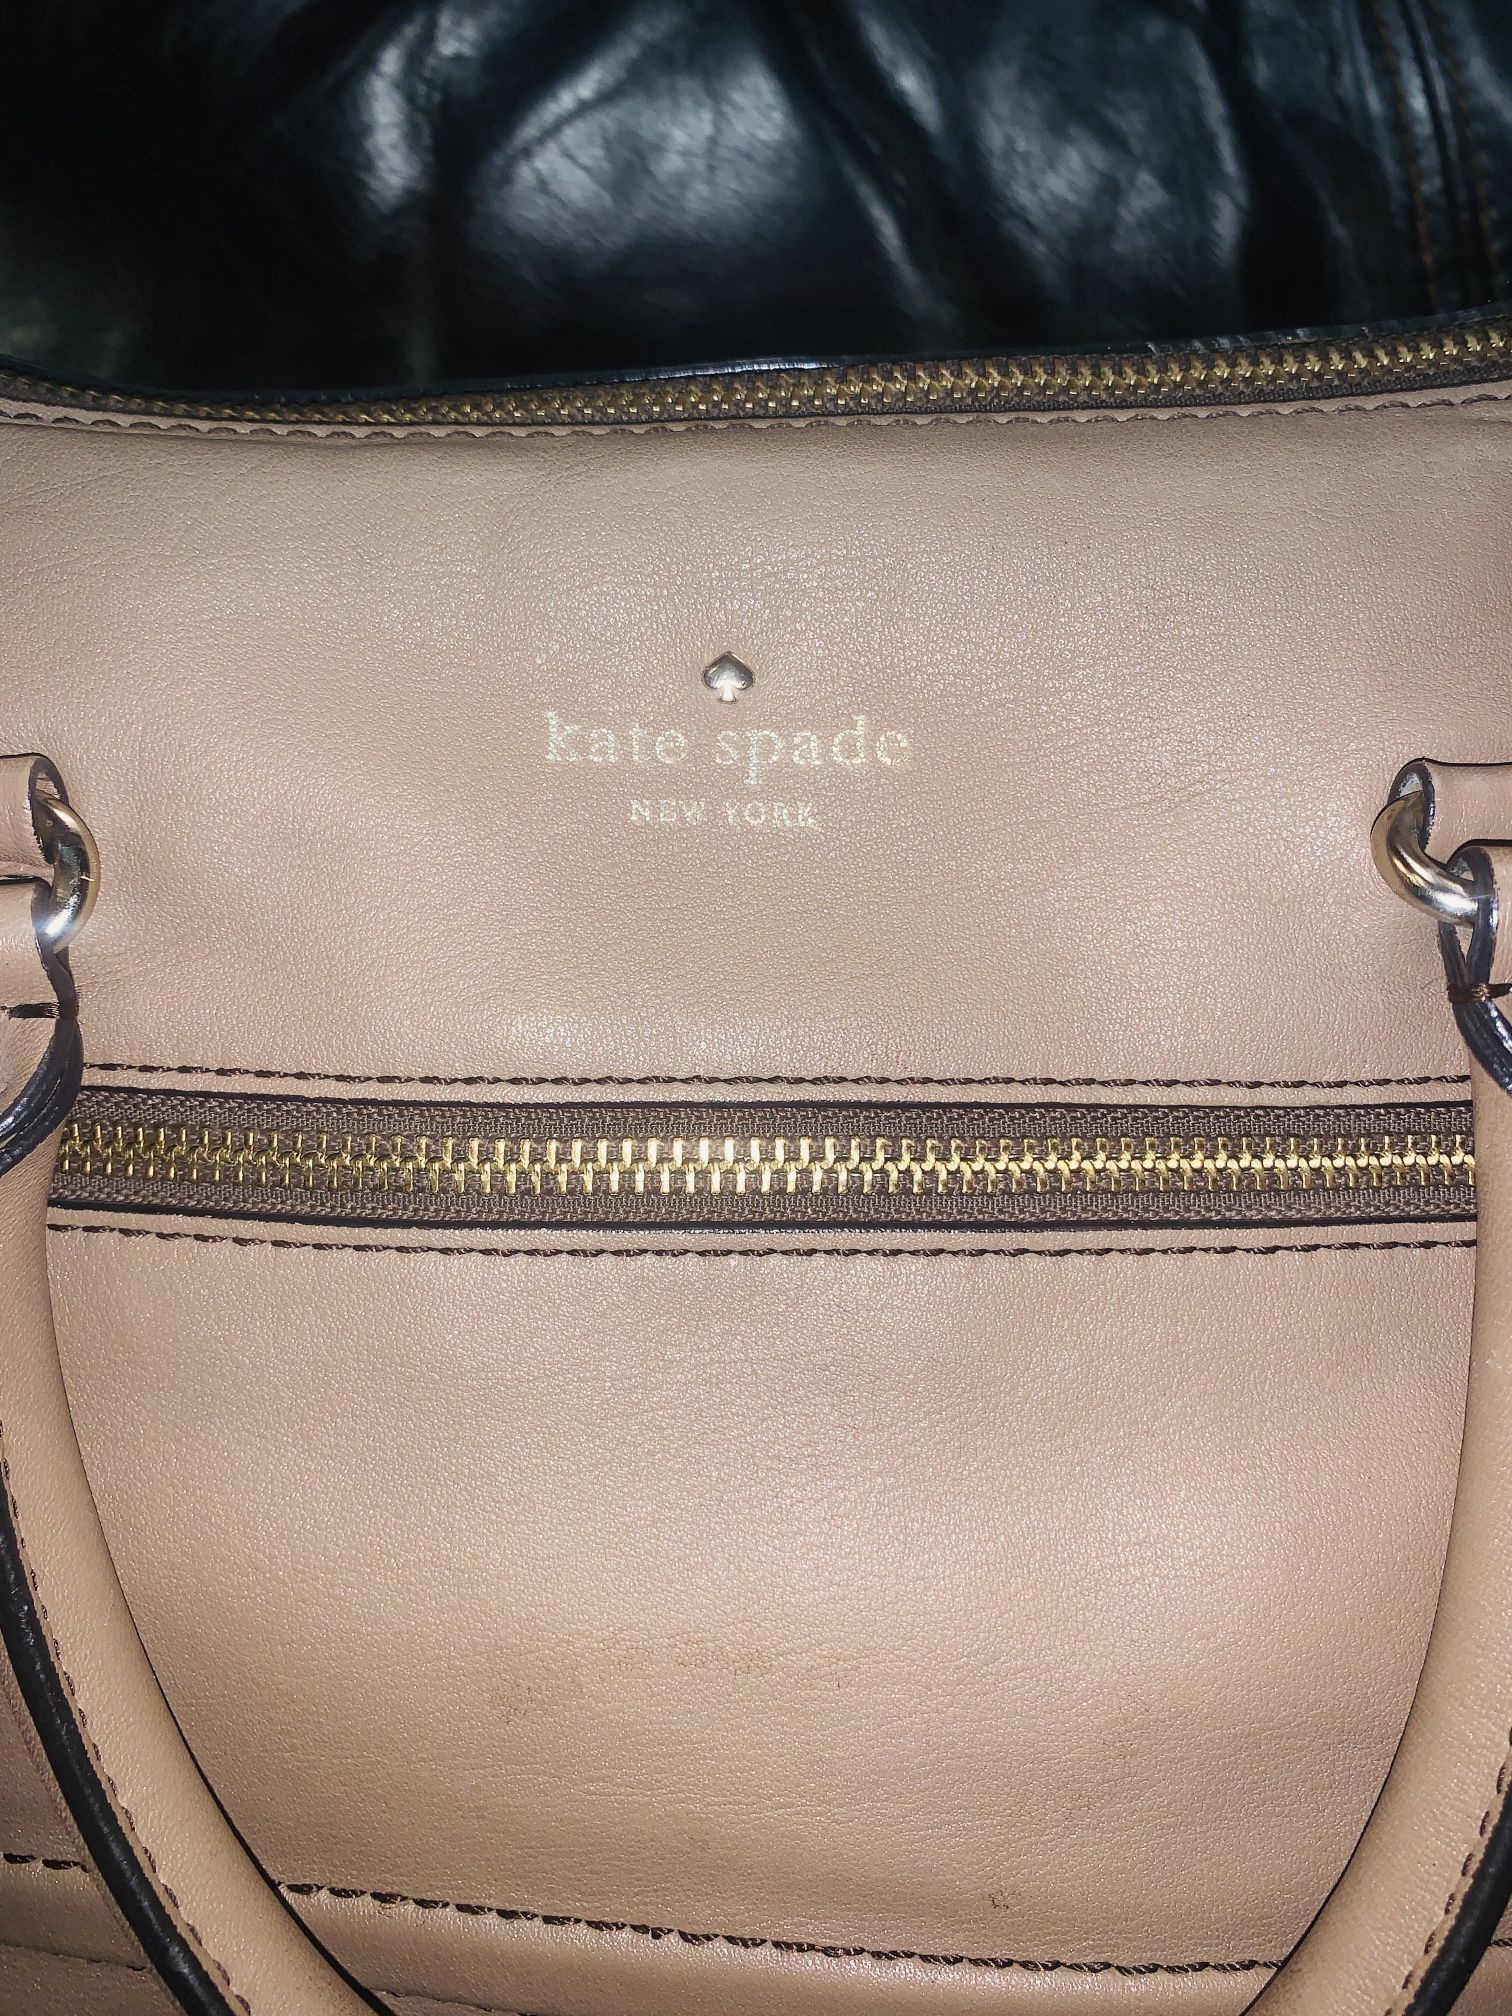 Kate Spade Tan Cream Leather Purse Handbag